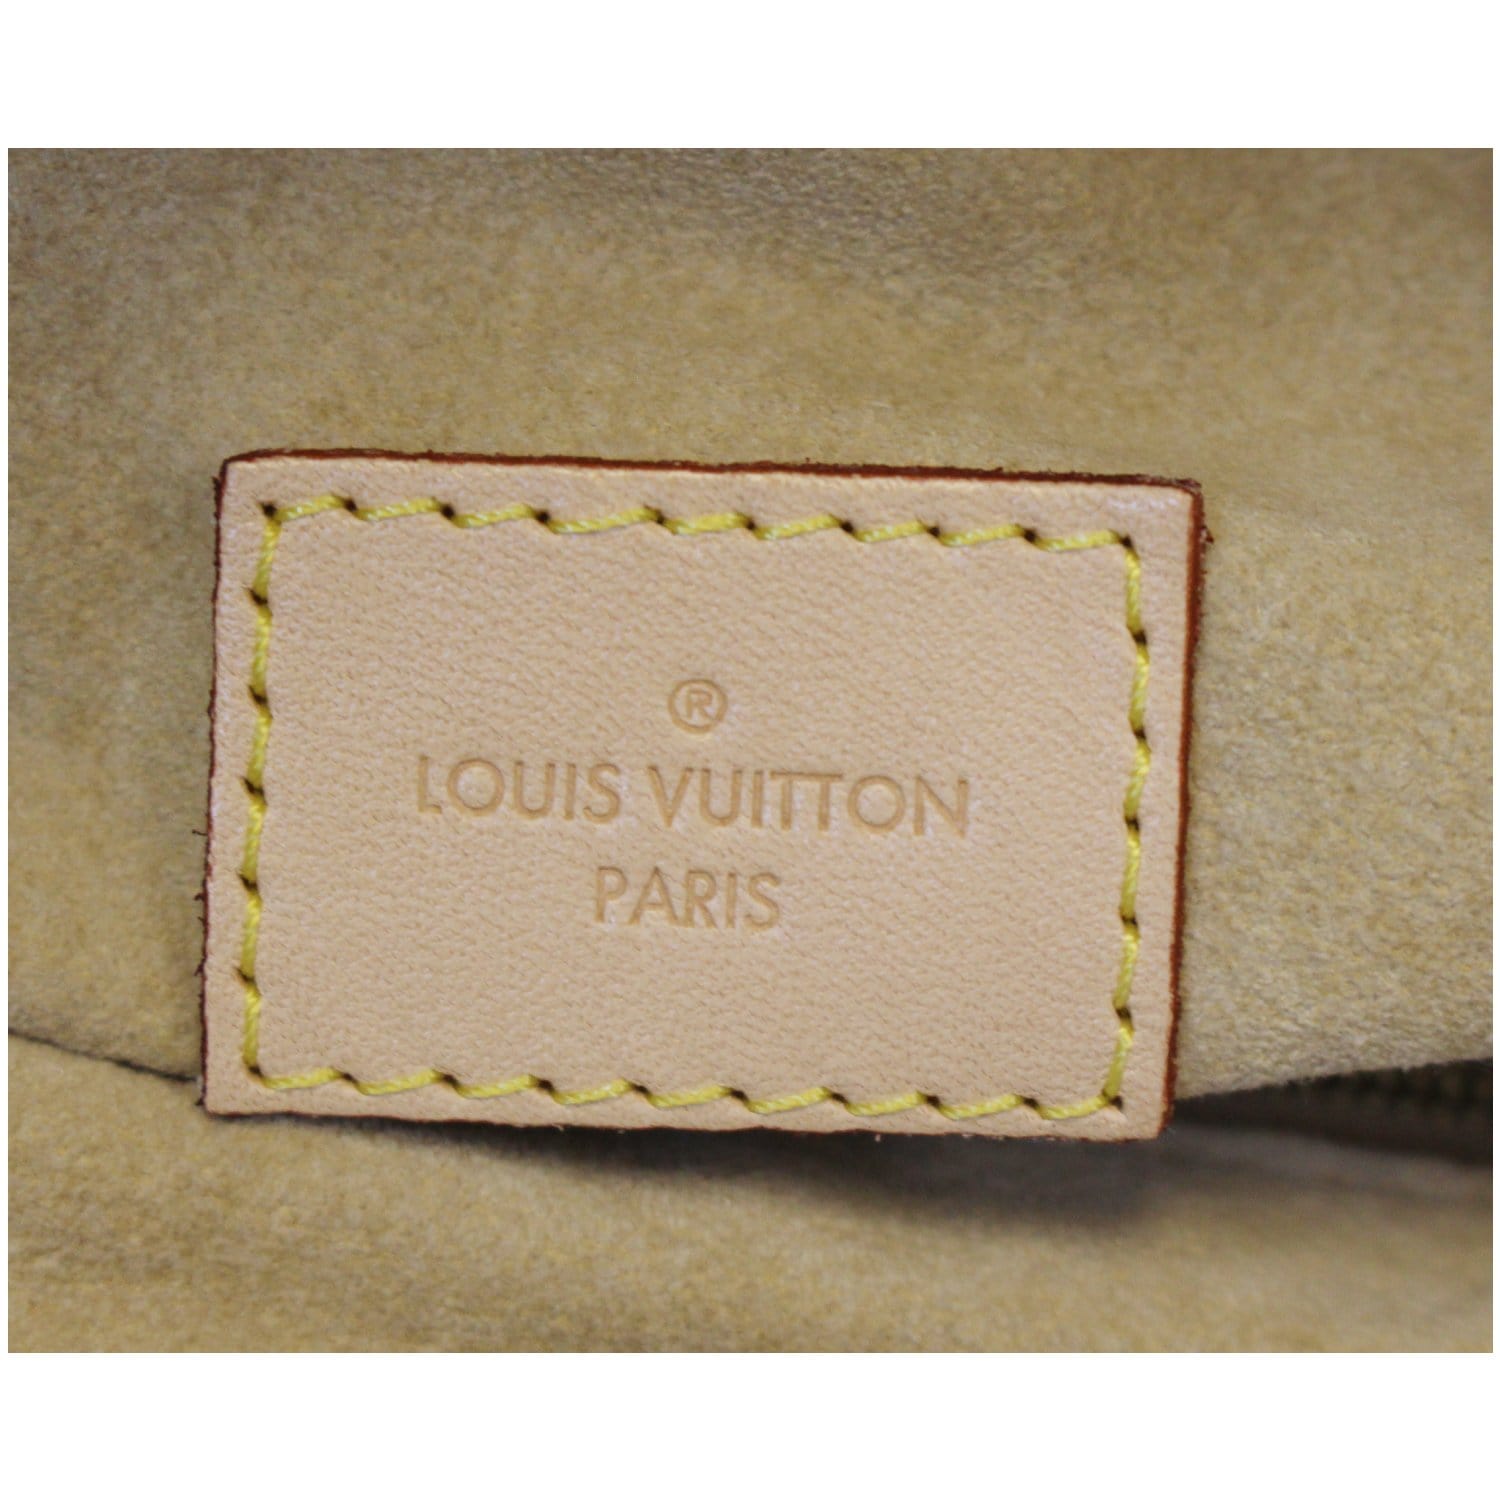 Sold at Auction: Louis Vuitton, LOUIS VUITTON, LARGE ARTSY DAMIER AZUR  CANVAS BAG, CREAMY WHITE AND BLUE CHECKERED RUBBERIZED COTTON